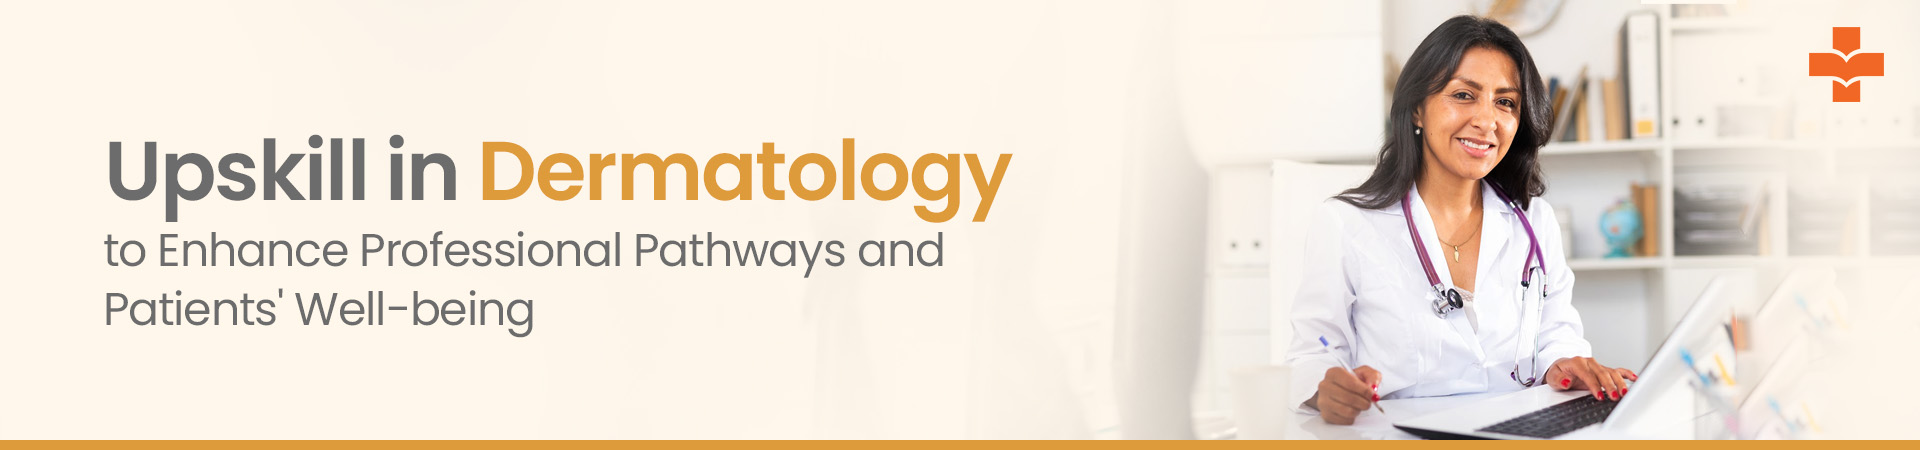 Online dermatology courses designed for mbbs graduates.